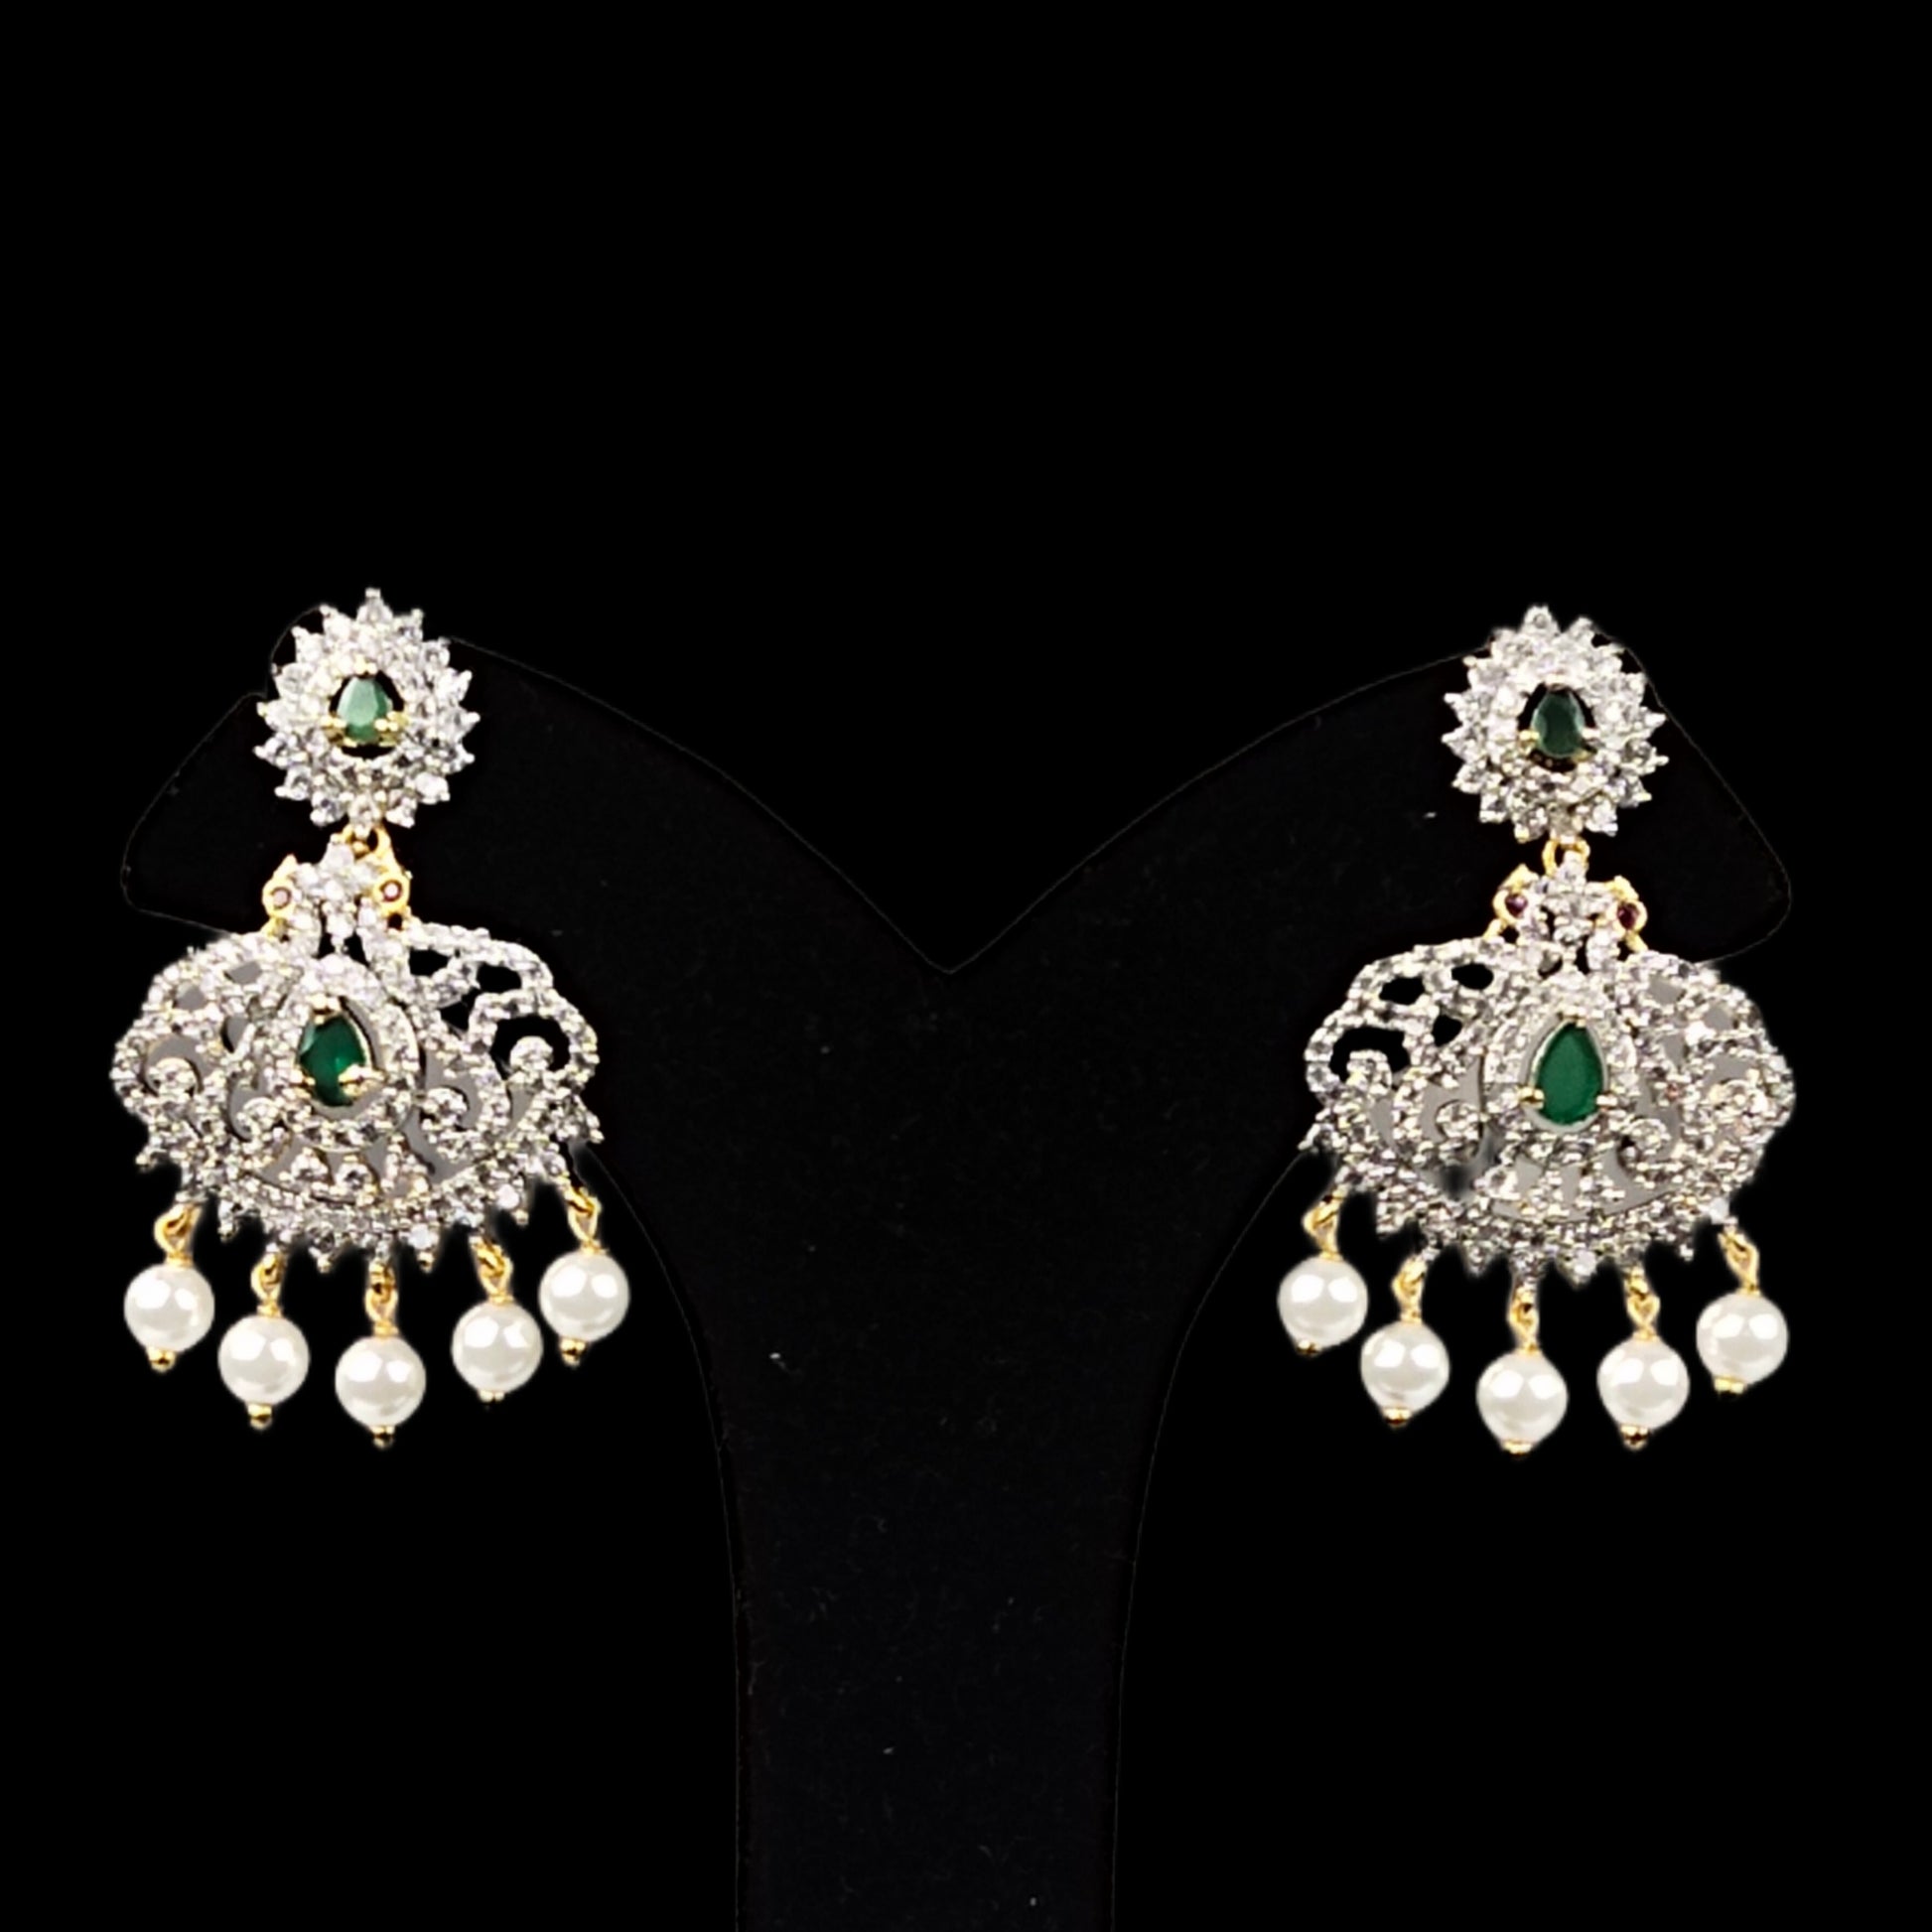 Ladies Long American Diamond Necklace Set By Asp Fashion Jewellery